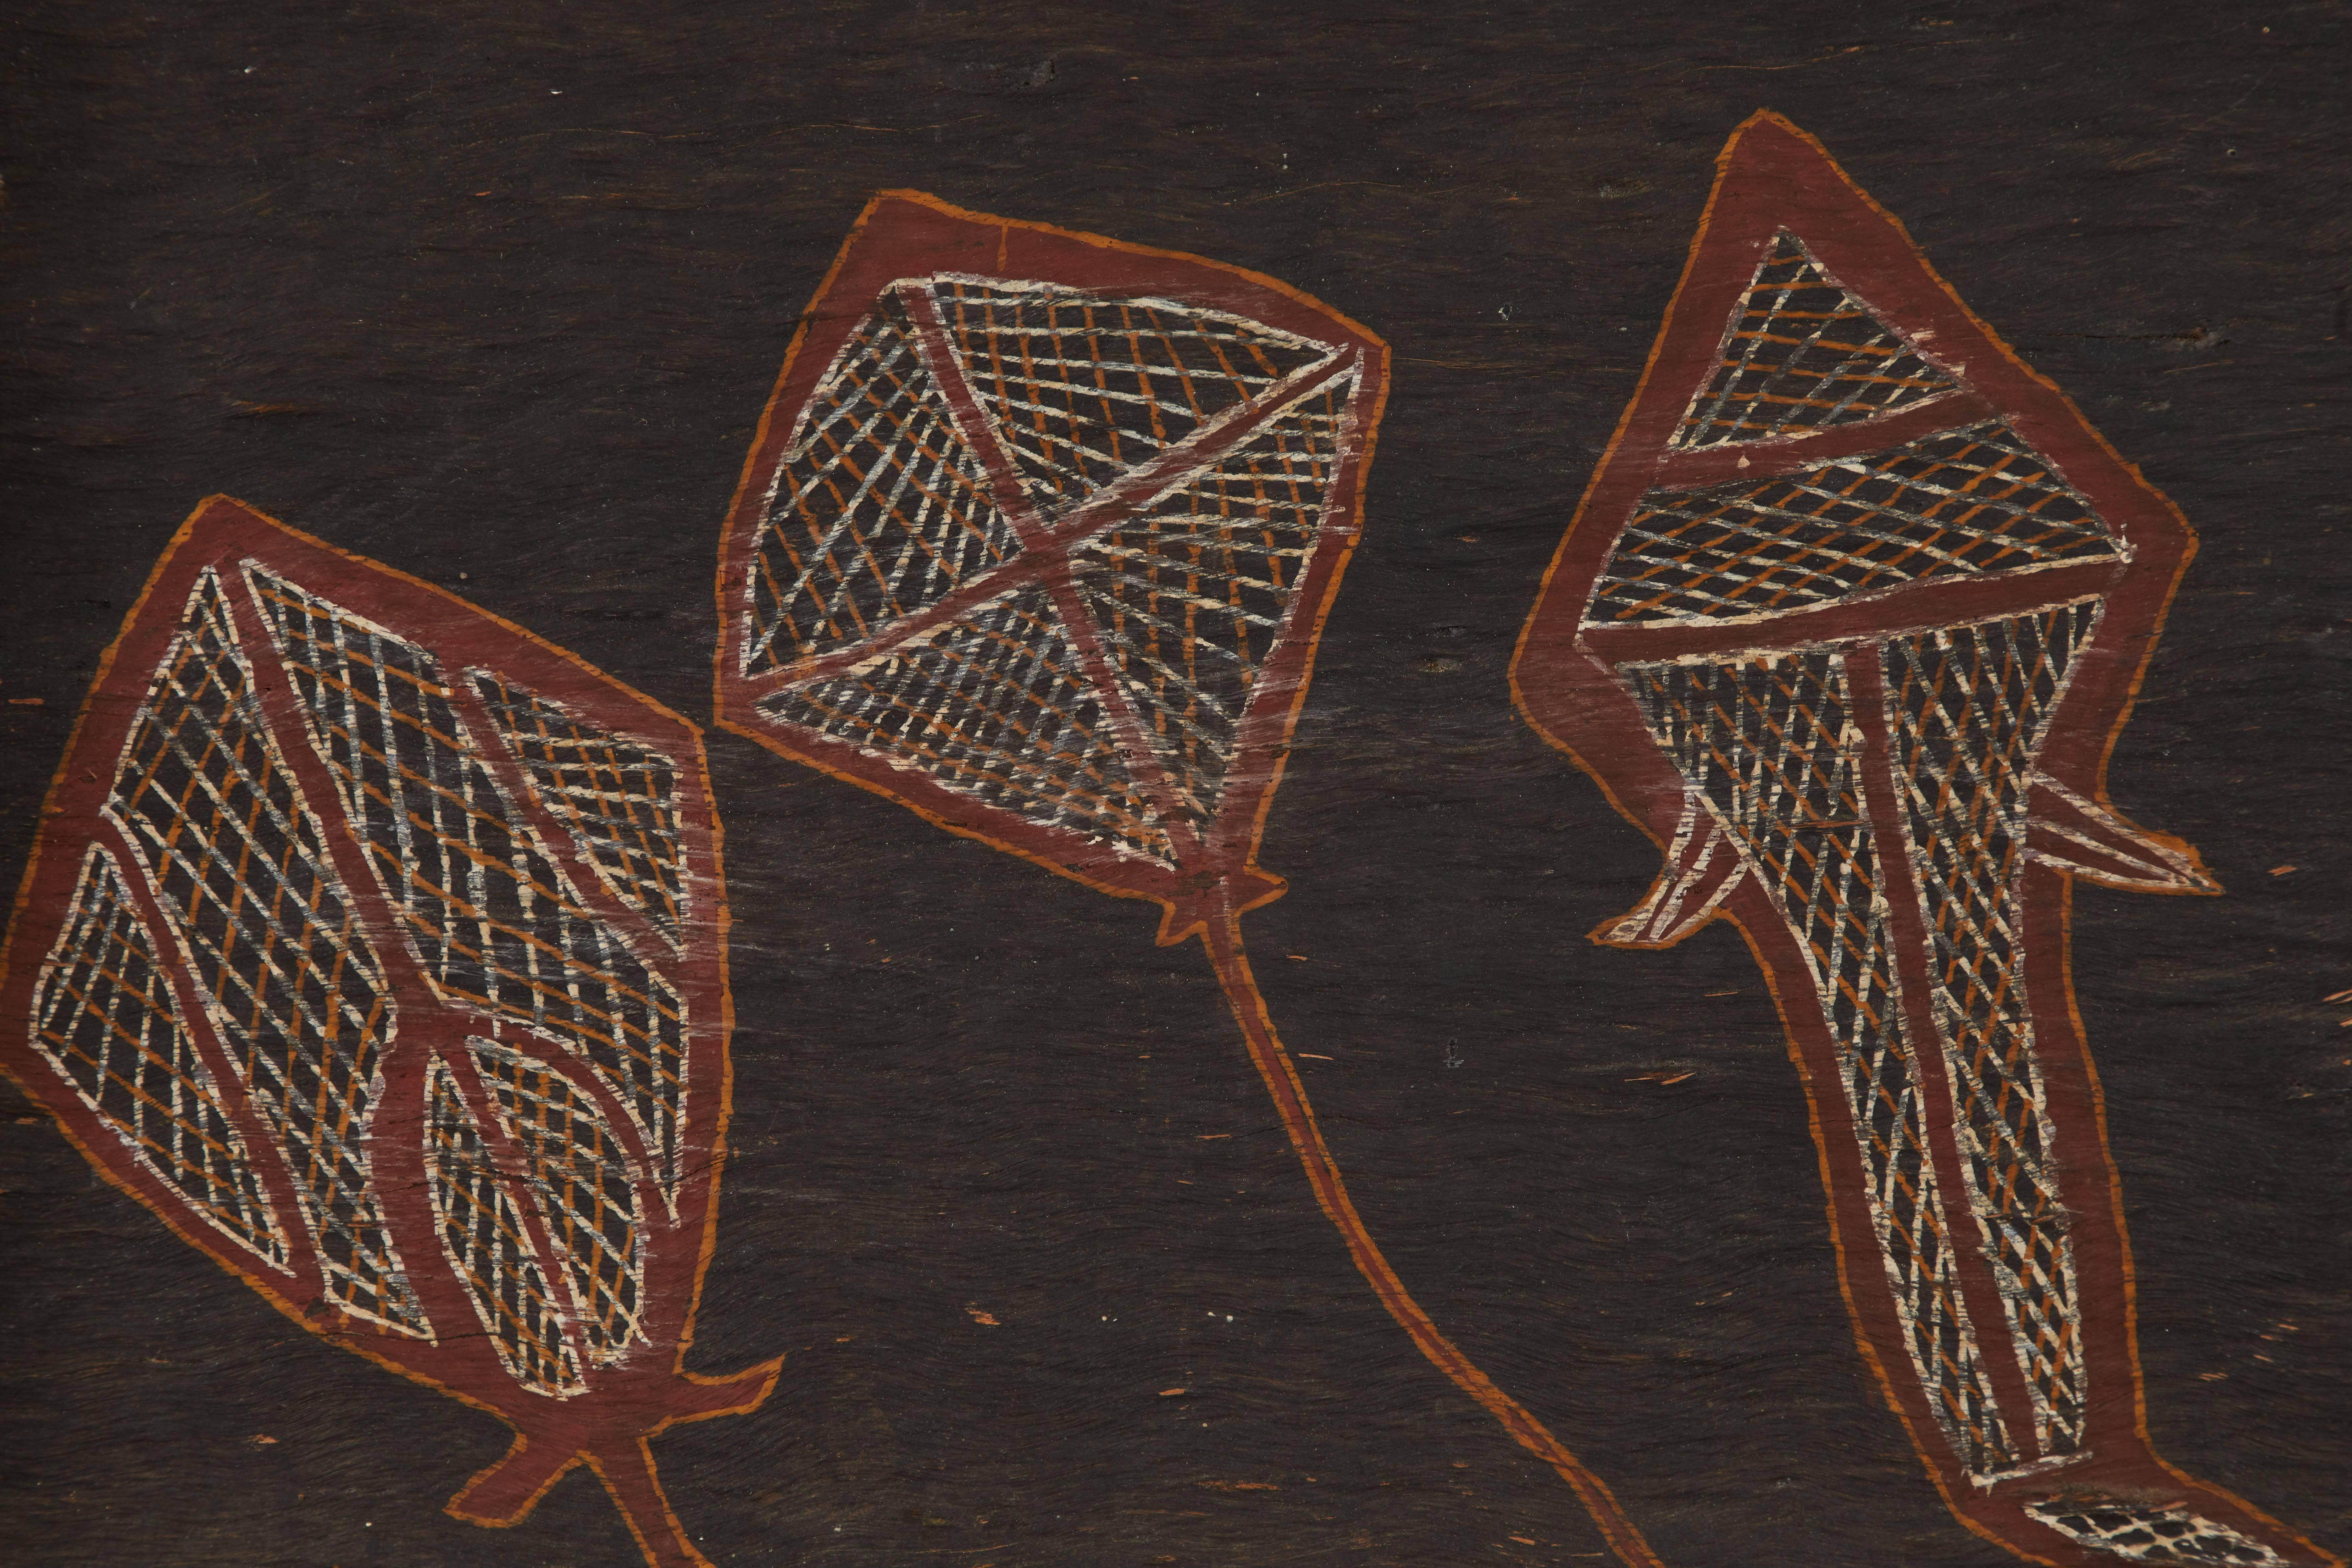 Primitive bark painting by Ingura people of Arnhem Land in Northern Australia. Made in Australia, circa 1950s.